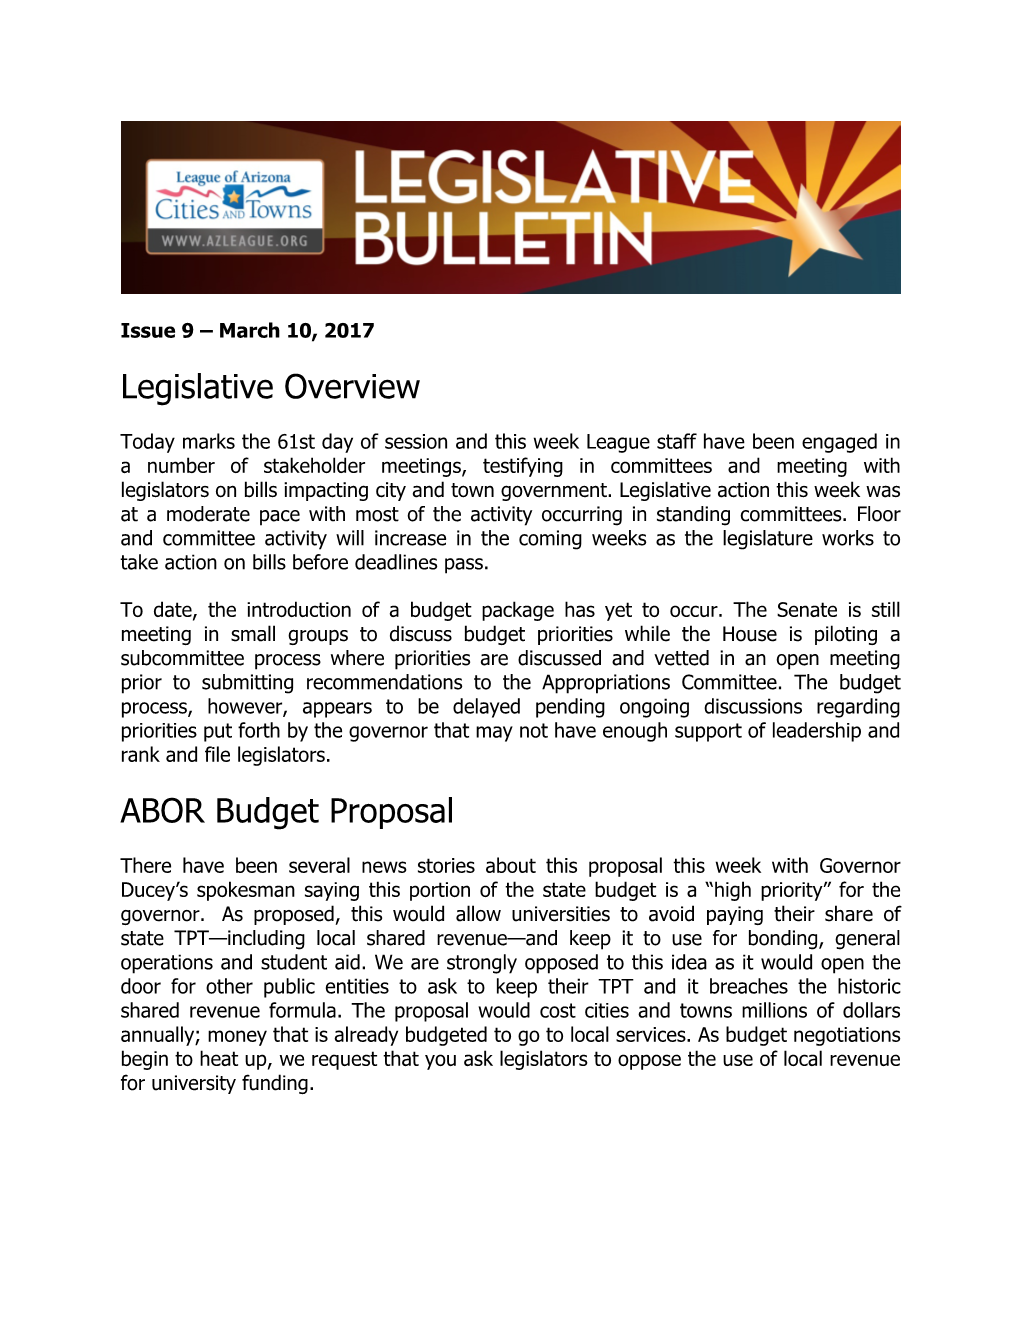 Legislative Overview ABOR Budget Proposal